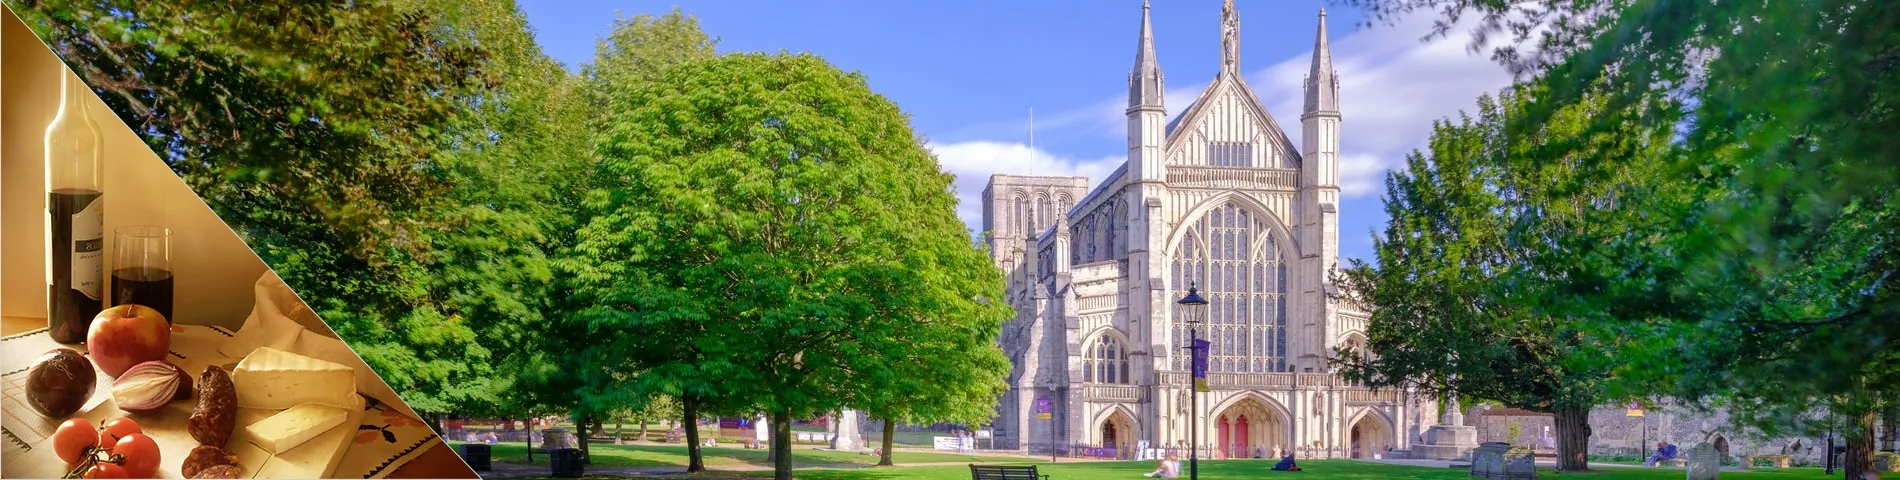 Winchester - Angličtina a Kultura